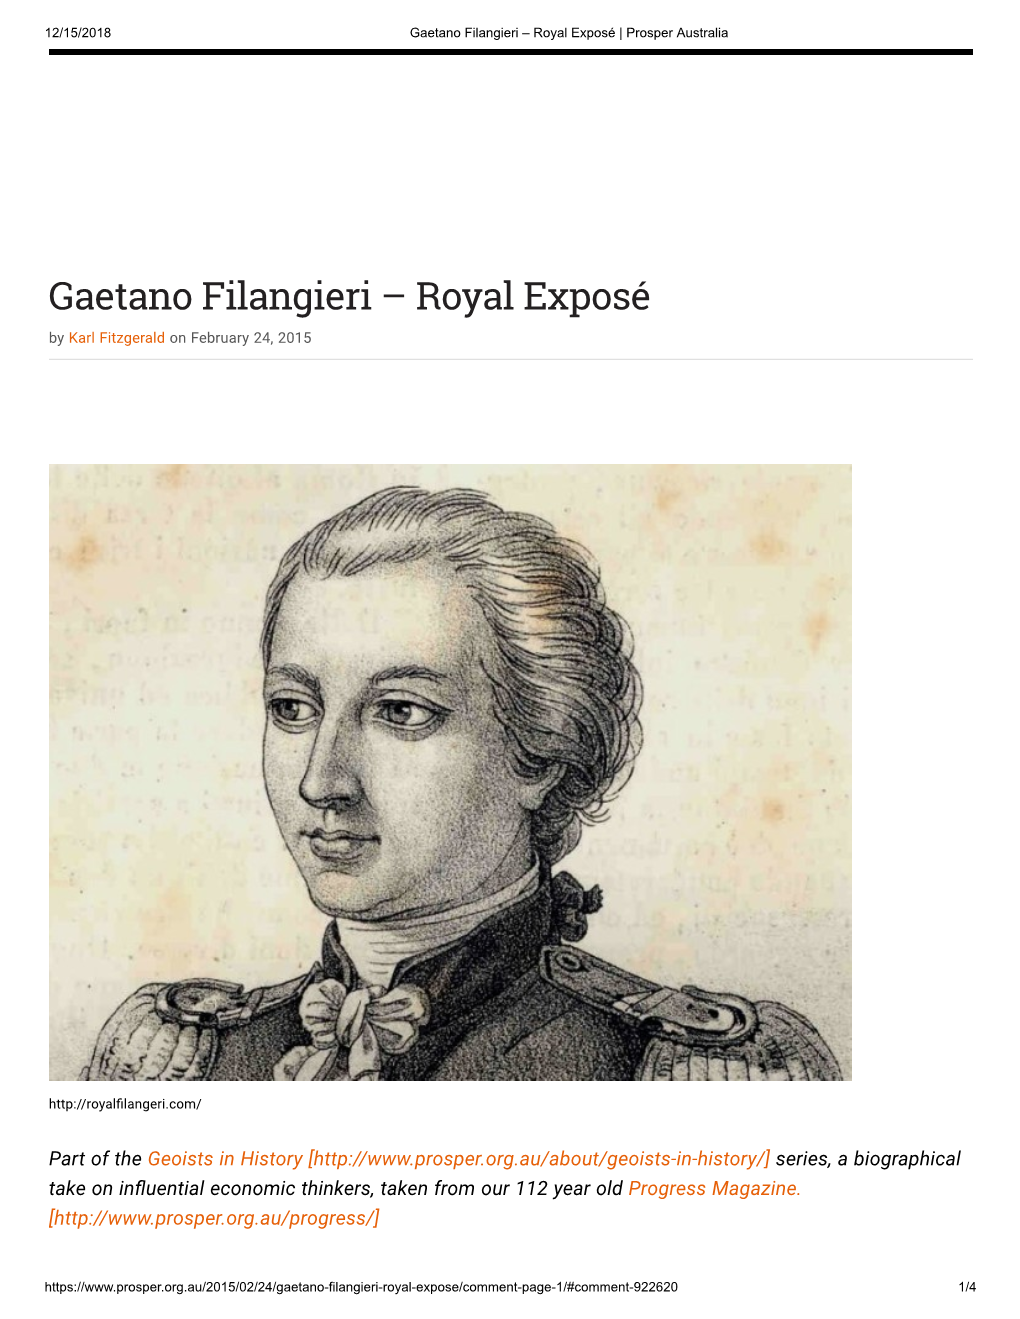 Gaetano Filangieri – Royal Exposé | Prosper Australia